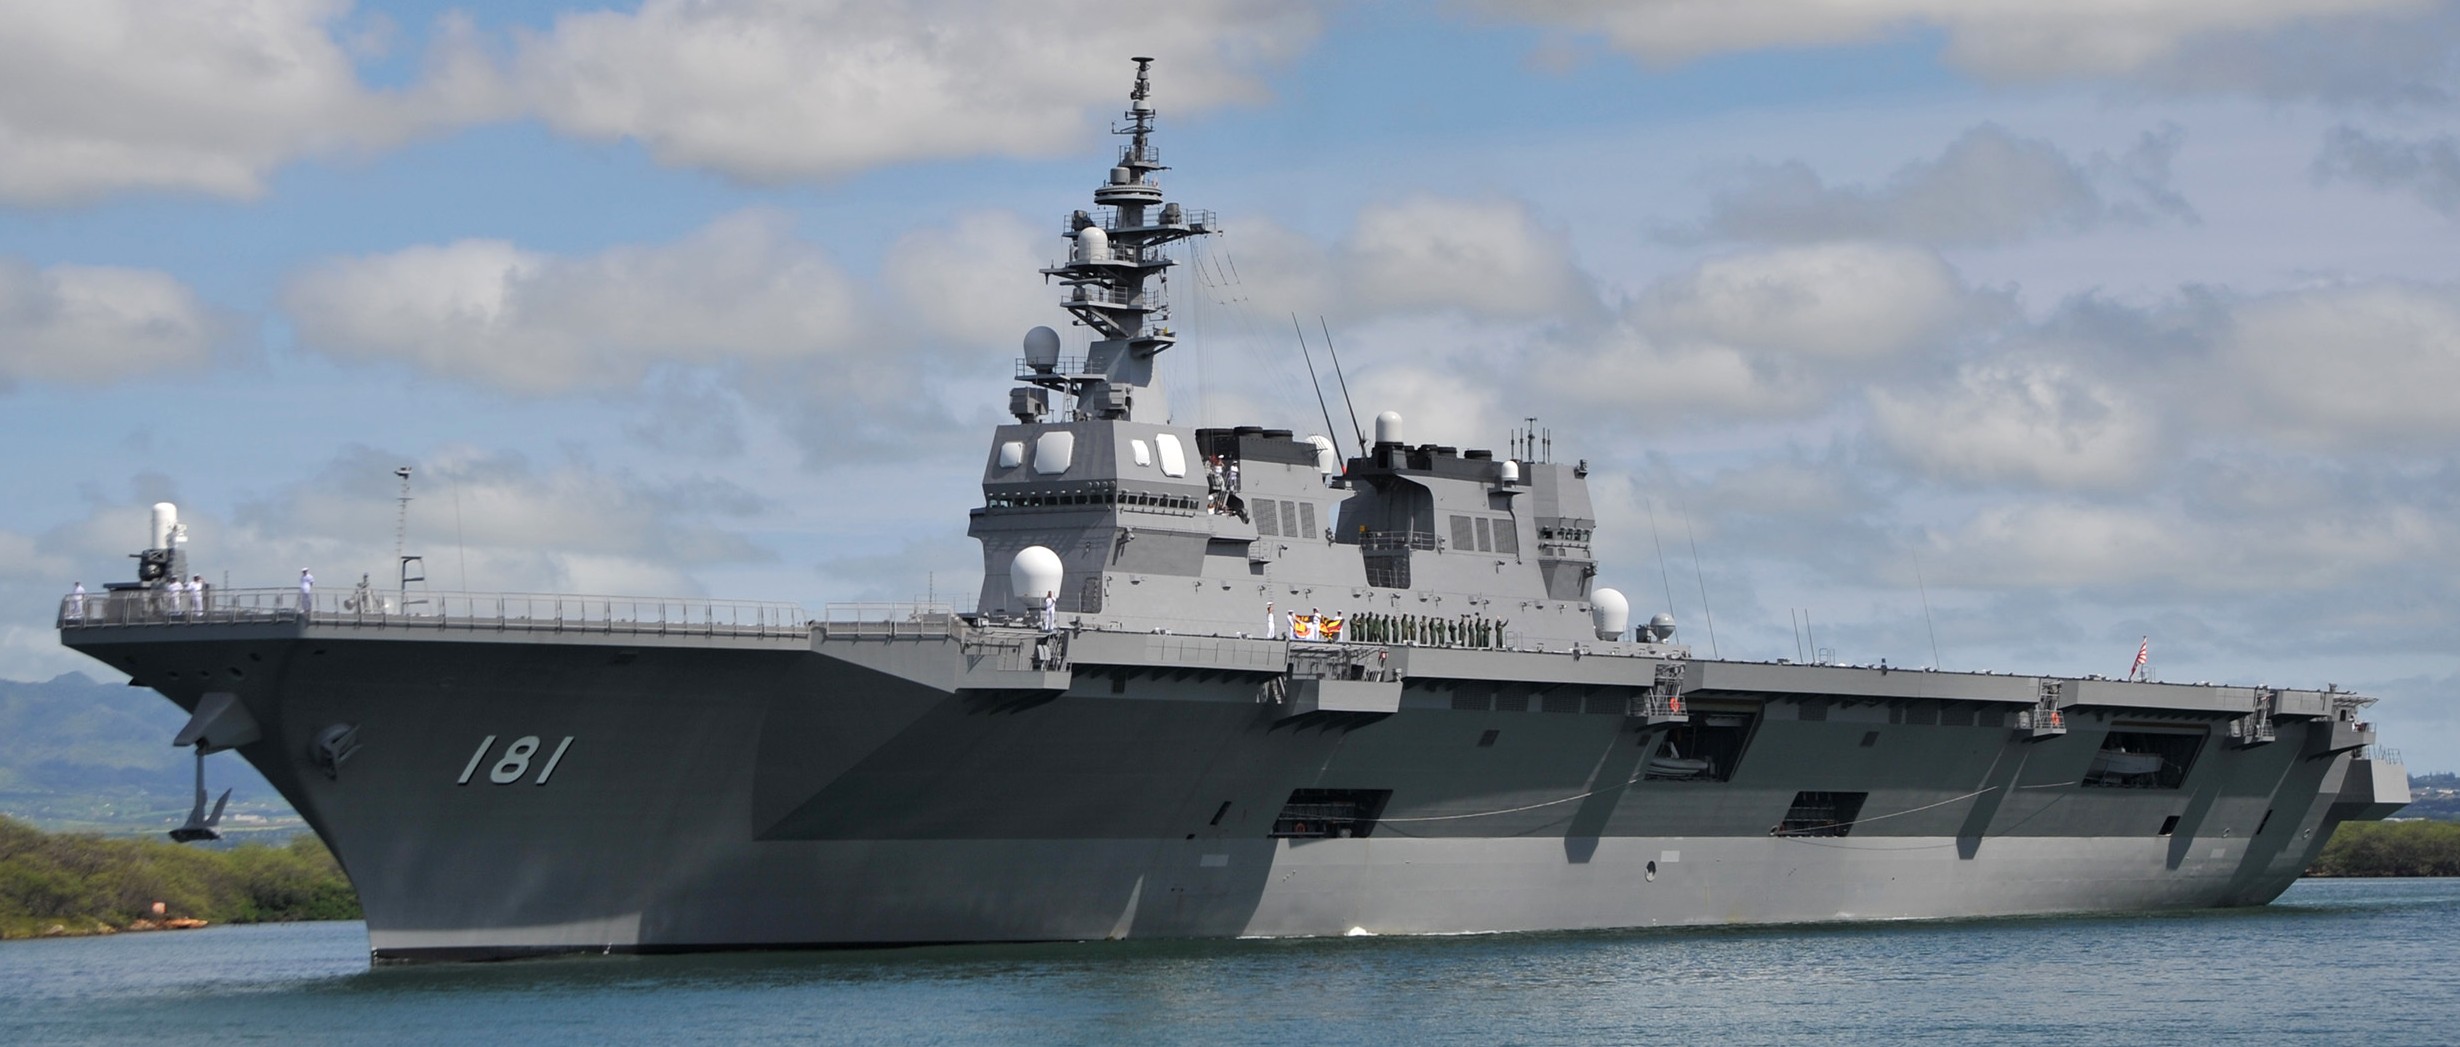 ddh-181 js hyuga helicopter destroyer japan maritime self defense force jmsdf 49 pearl harbor hawaii